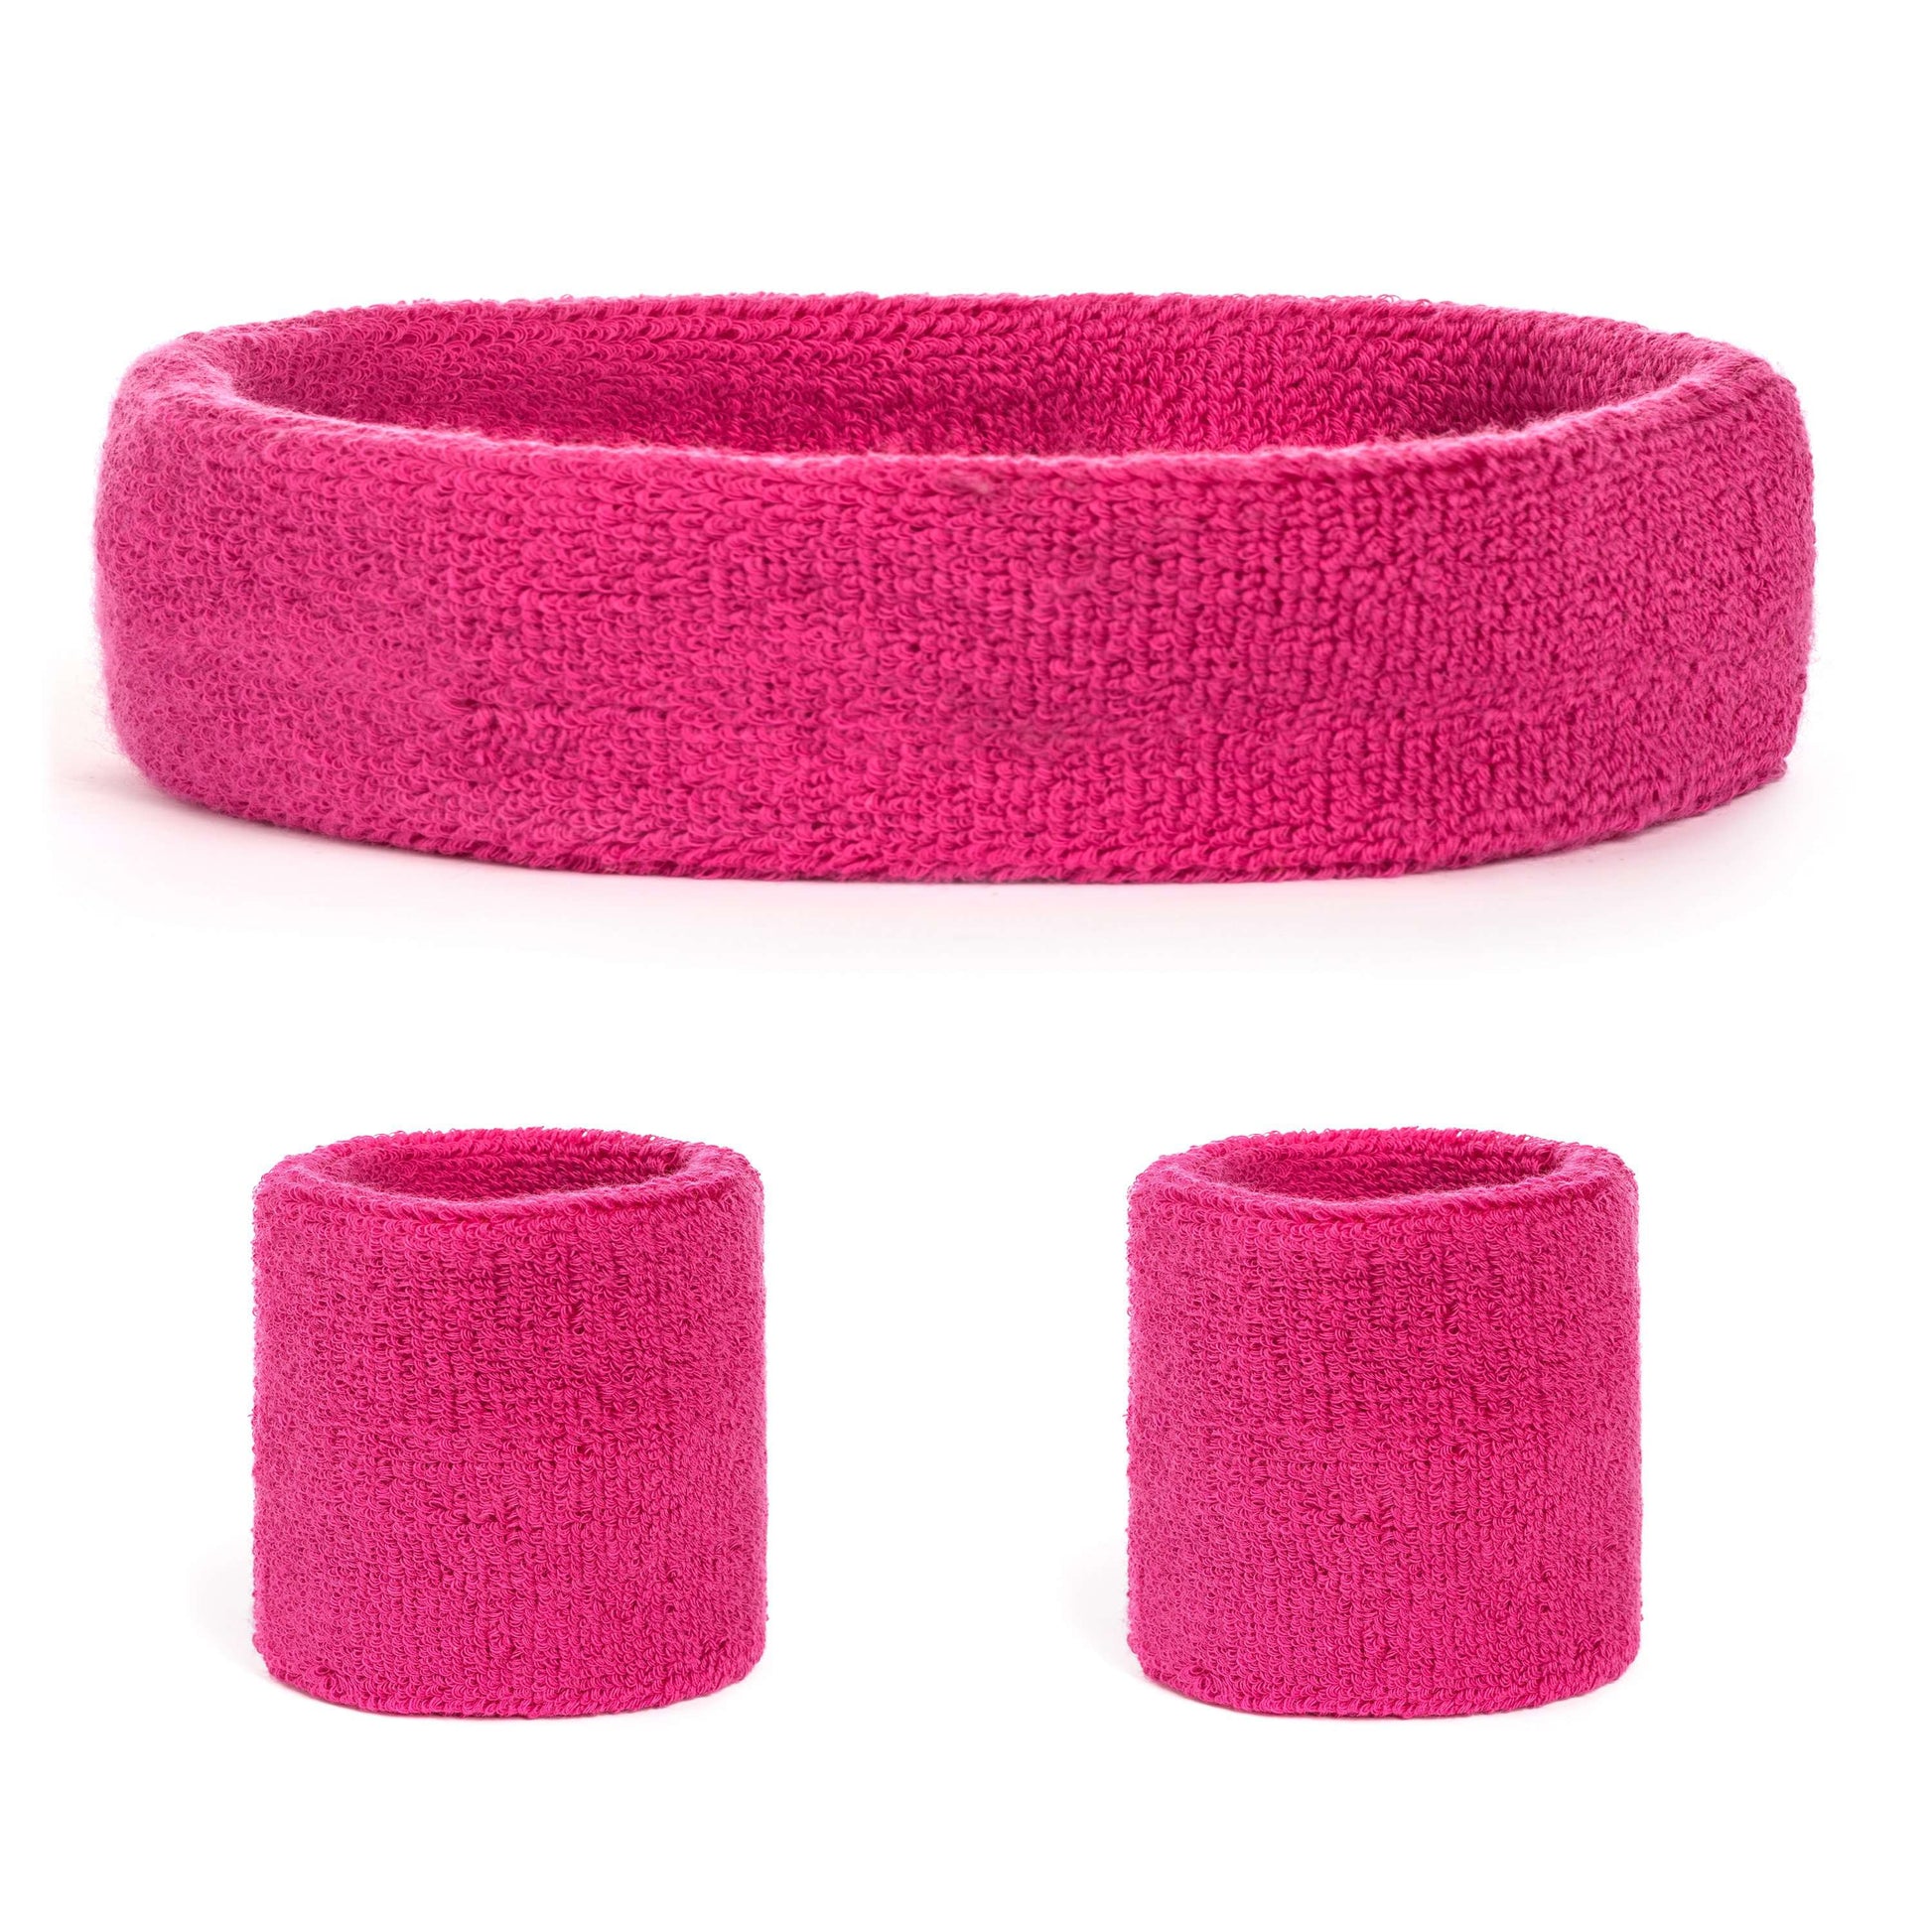 Suddora Sweatband Set (1 Headband & 2 Wristbands) - Neon Pink